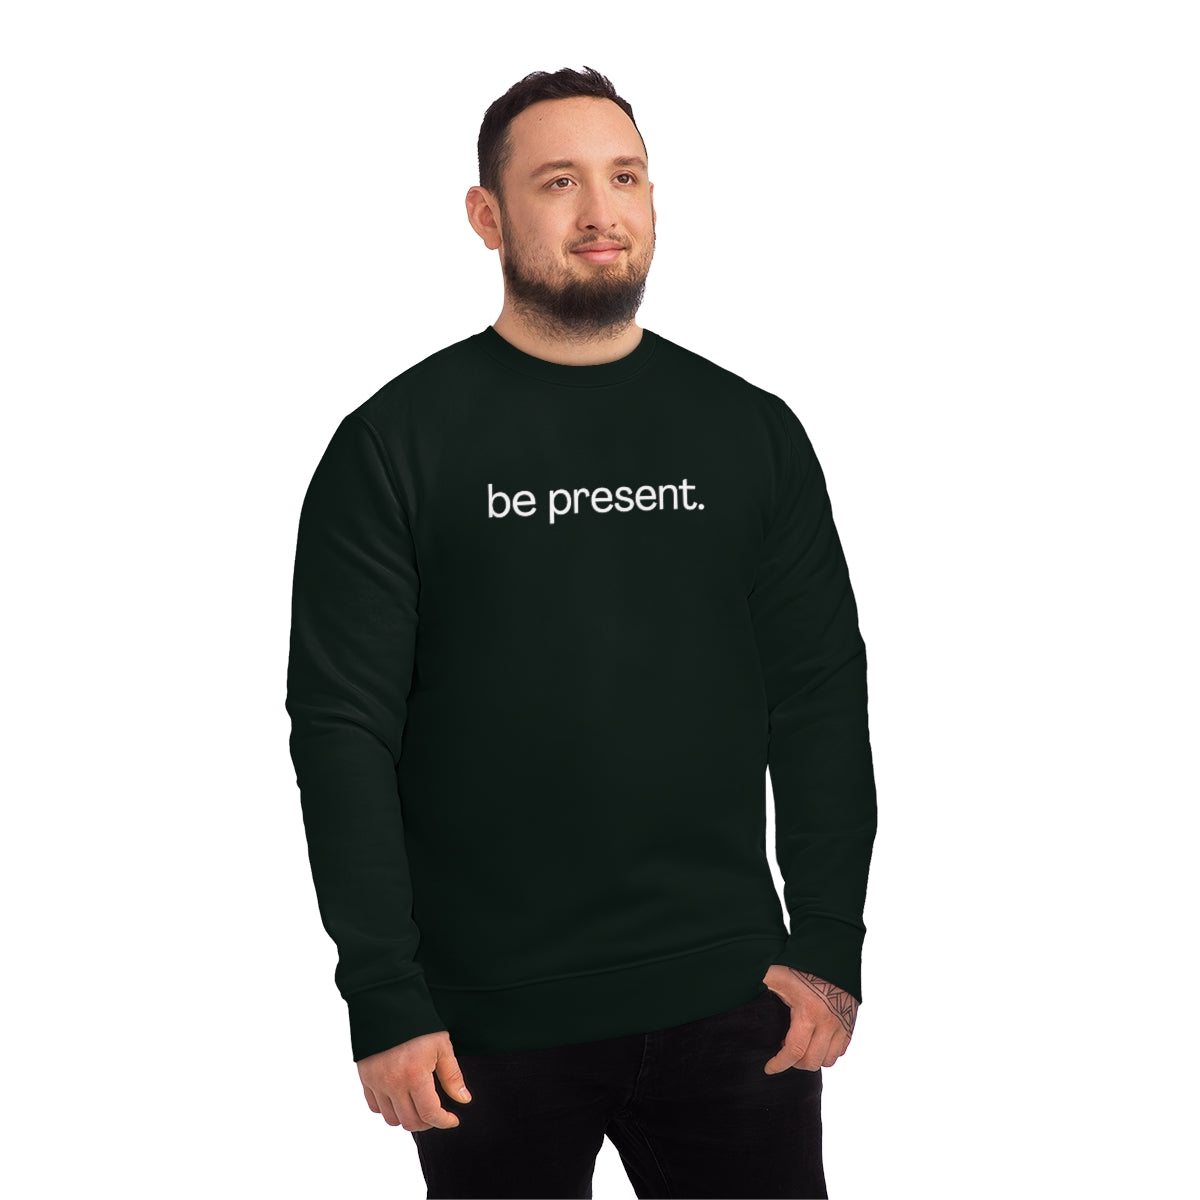 be present. - Unisex Changer Sweatshirt